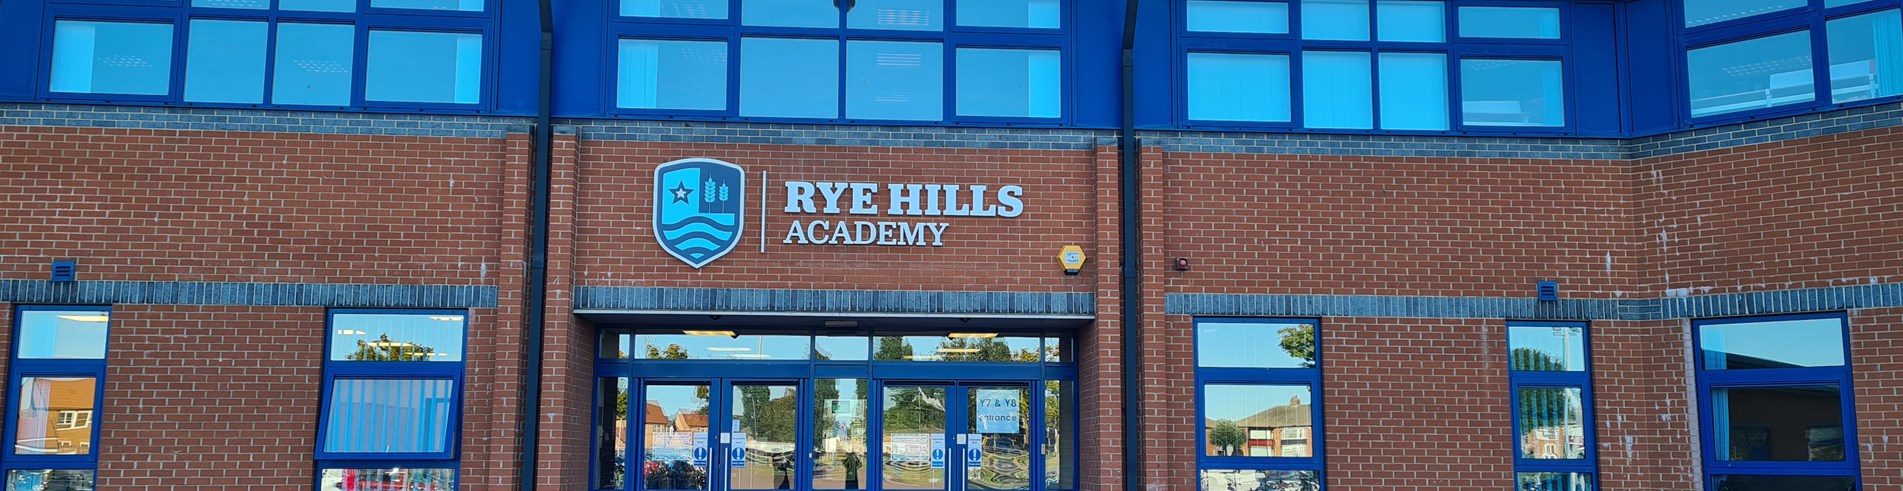 Rye Hills signs